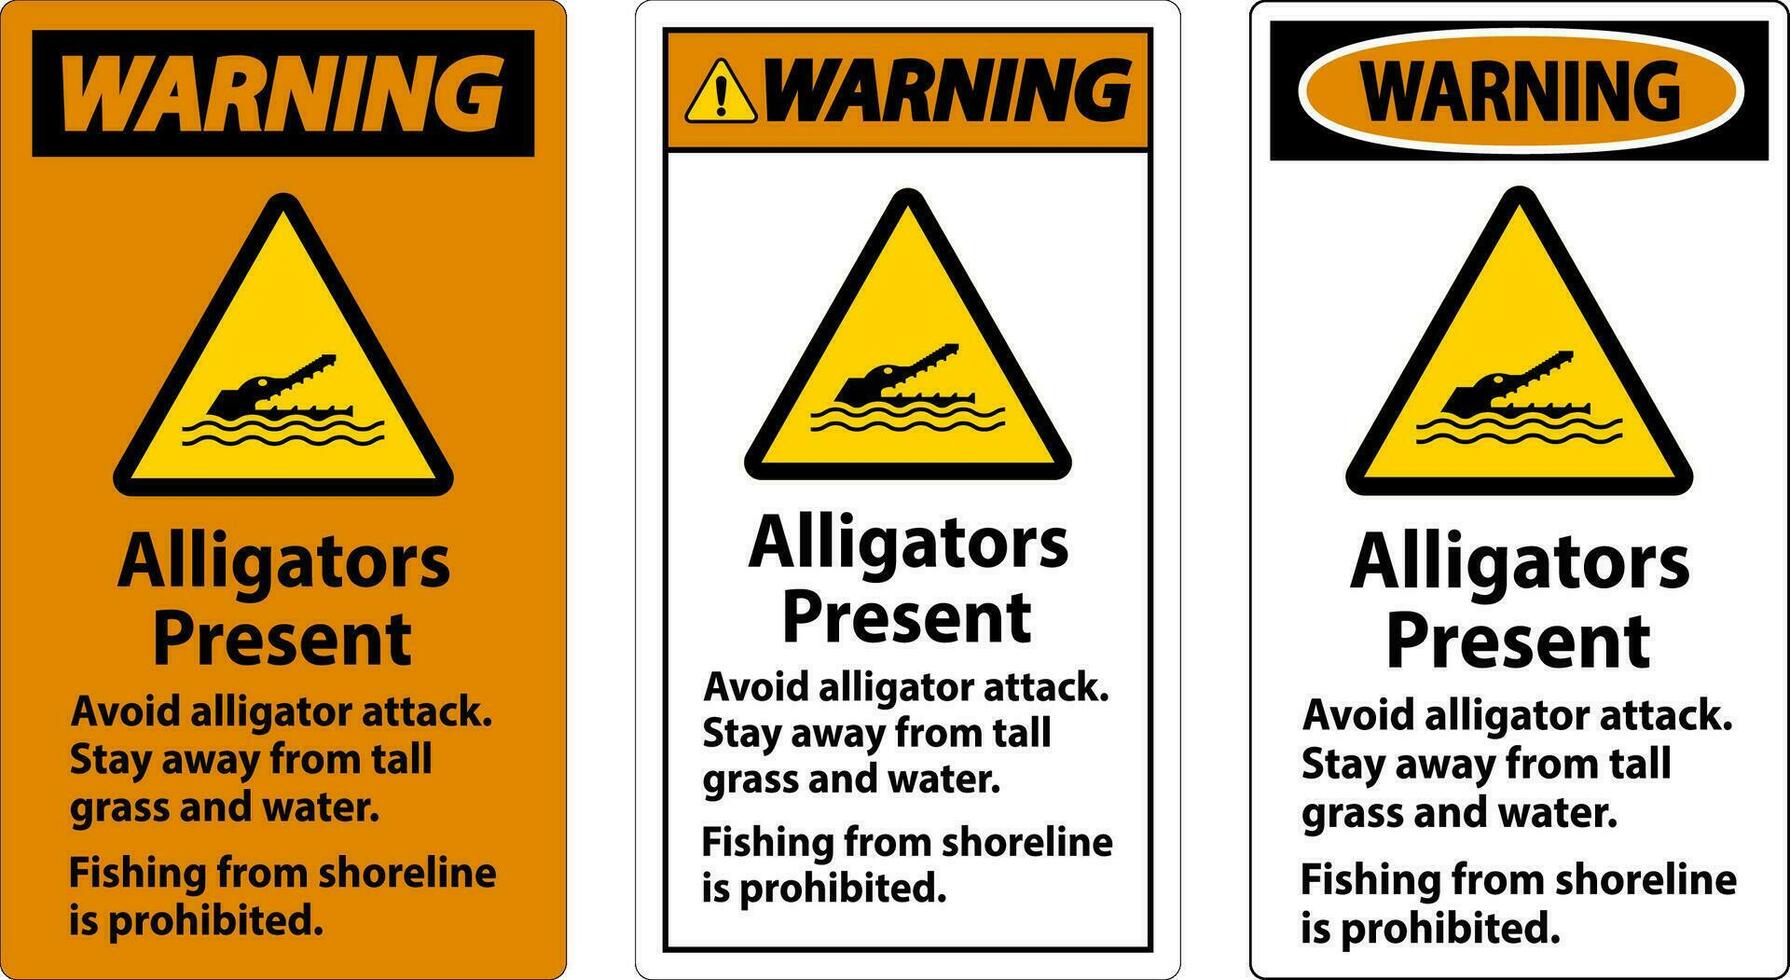 alligator avertissement signe, danger - alligators cadeau, éviter alligator attaque, rester loin, pêche de littoral est interdit vecteur